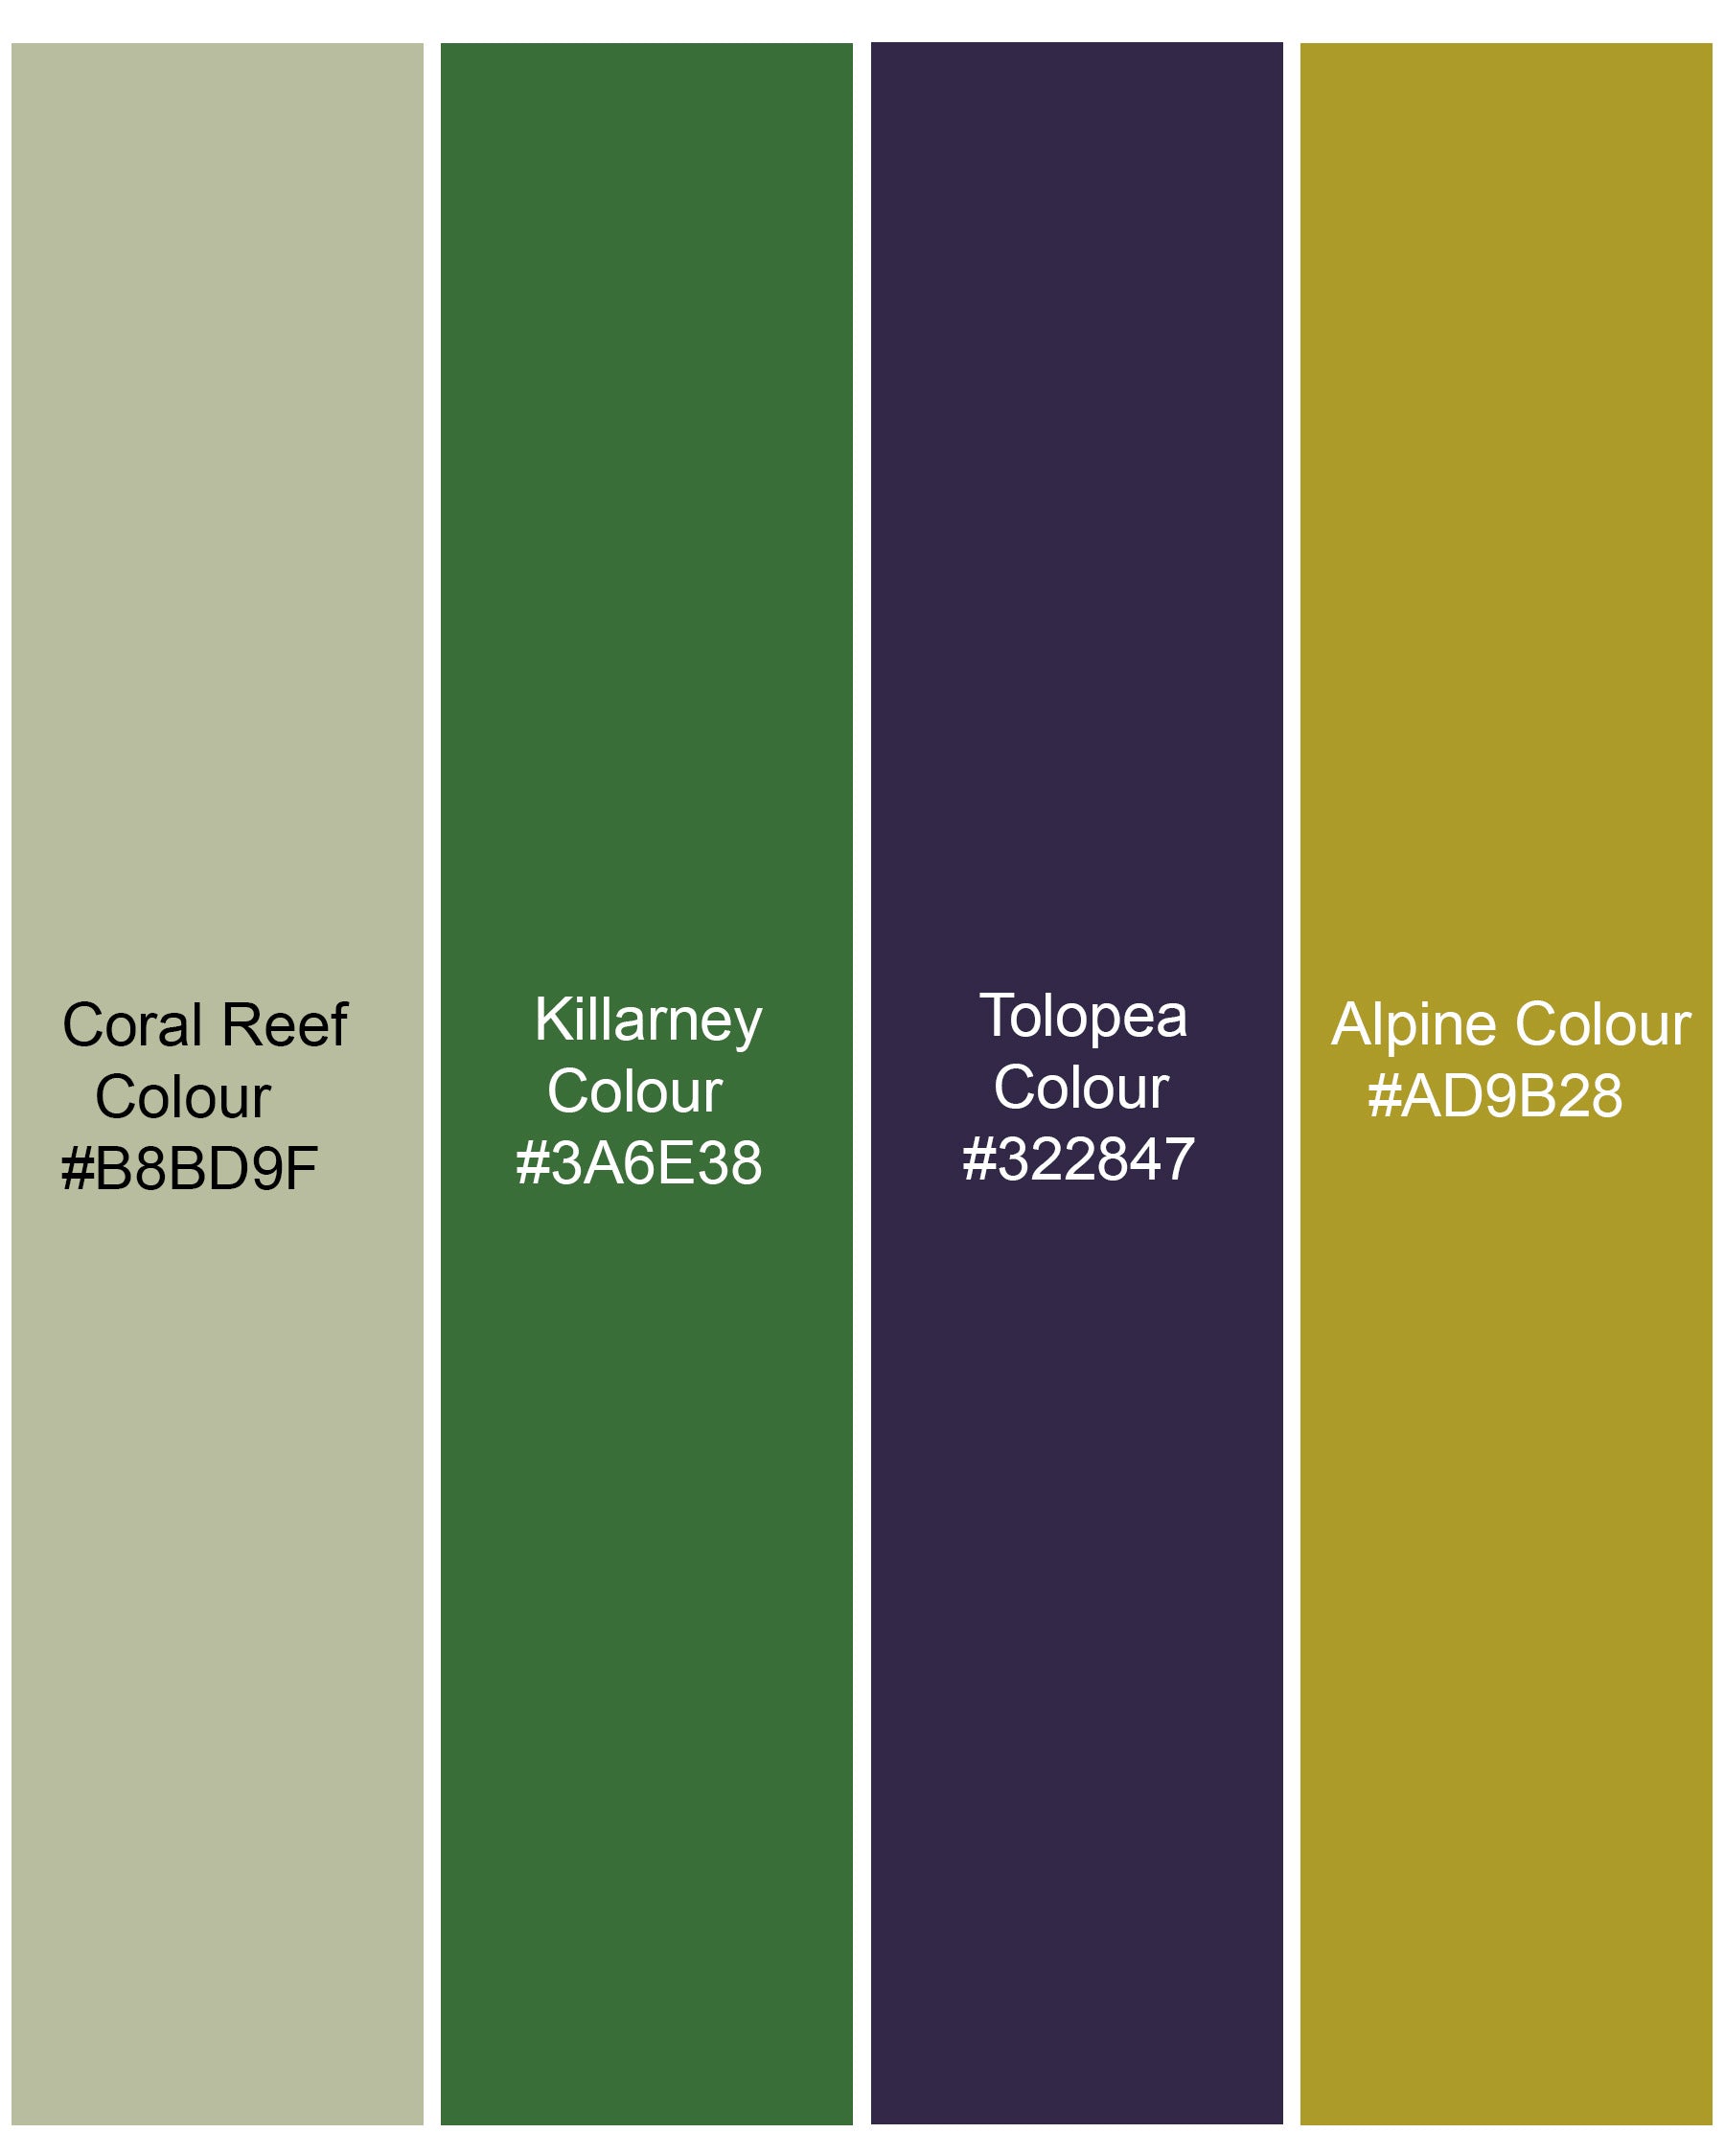 Coral Reef Green Multicolour Zig Zag Printed Super Soft Premium Cotton Shirt 8059-CA-38, 8059-CA-H-38, 8059-CA-39, 8059-CA-H-39, 8059-CA-40, 8059-CA-H-40, 8059-CA-42, 8059-CA-H-42, 8059-CA-44, 8059-CA-H-44, 8059-CA-46, 8059-CA-H-46, 8059-CA-48, 8059-CA-H-48, 8059-CA-50, 8059-CA-H-50, 8059-CA-52, 8059-CA-H-52